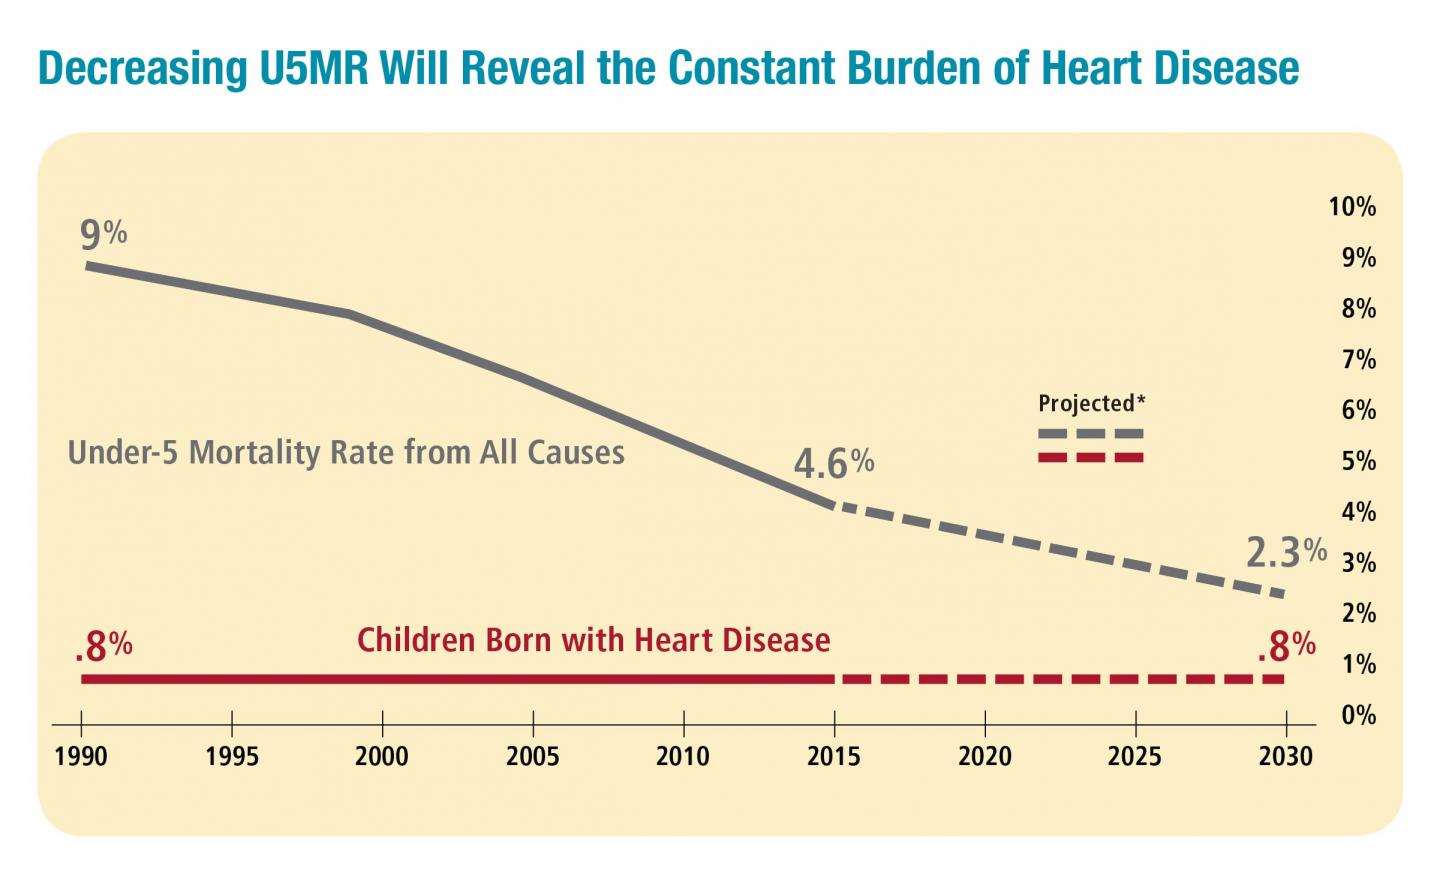 Decreasing Under-5 Mortality Rate Will Reveal the Constant Burden of Heart Disease